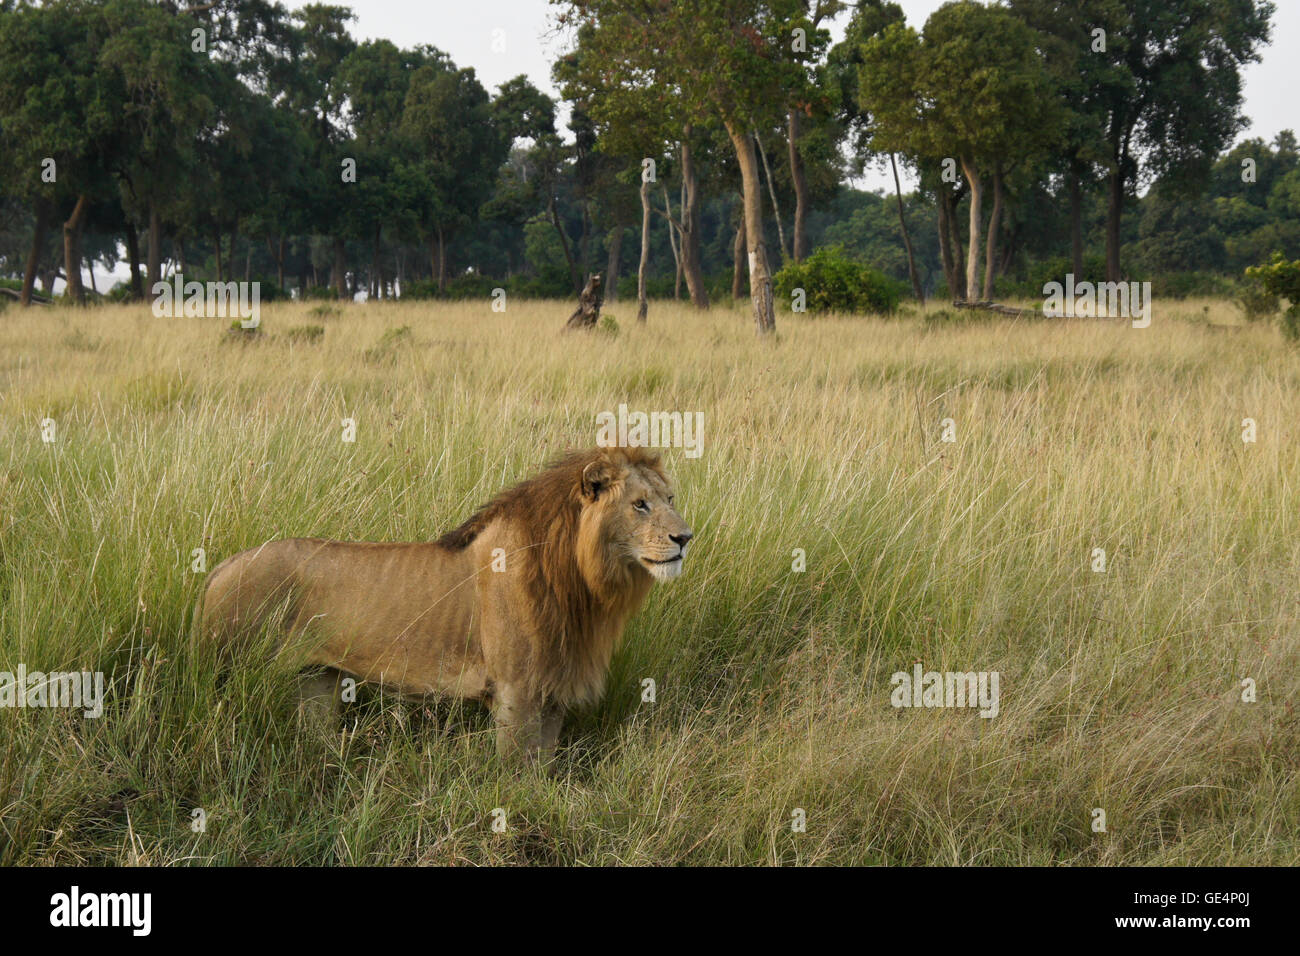 Male lion in grassland at edge of woodland, Masai Mara, Kenya Stock Photo